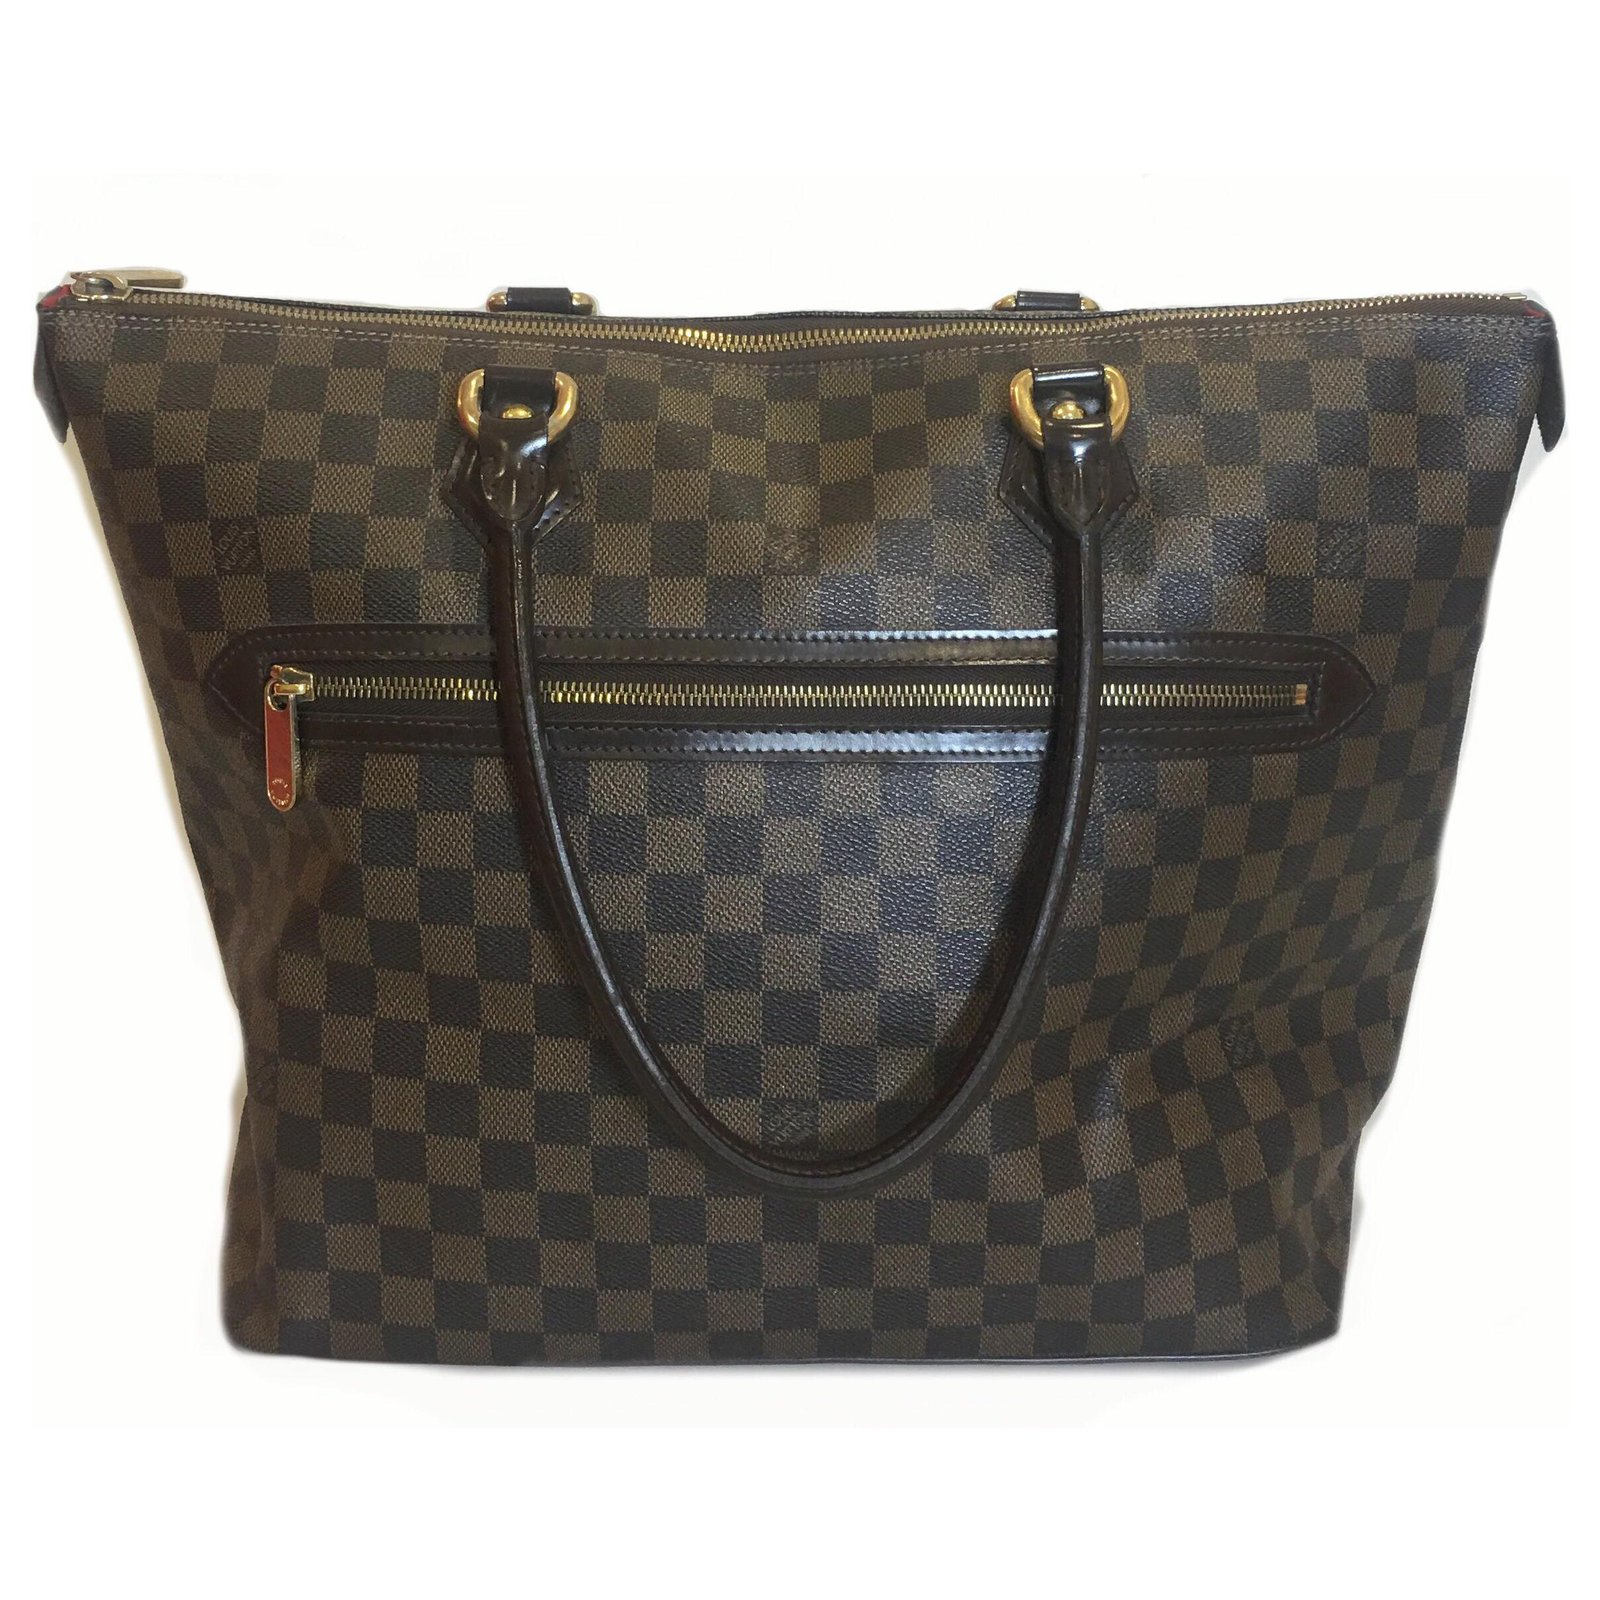 Louis Vuitton Saleya Gm Tote Bag